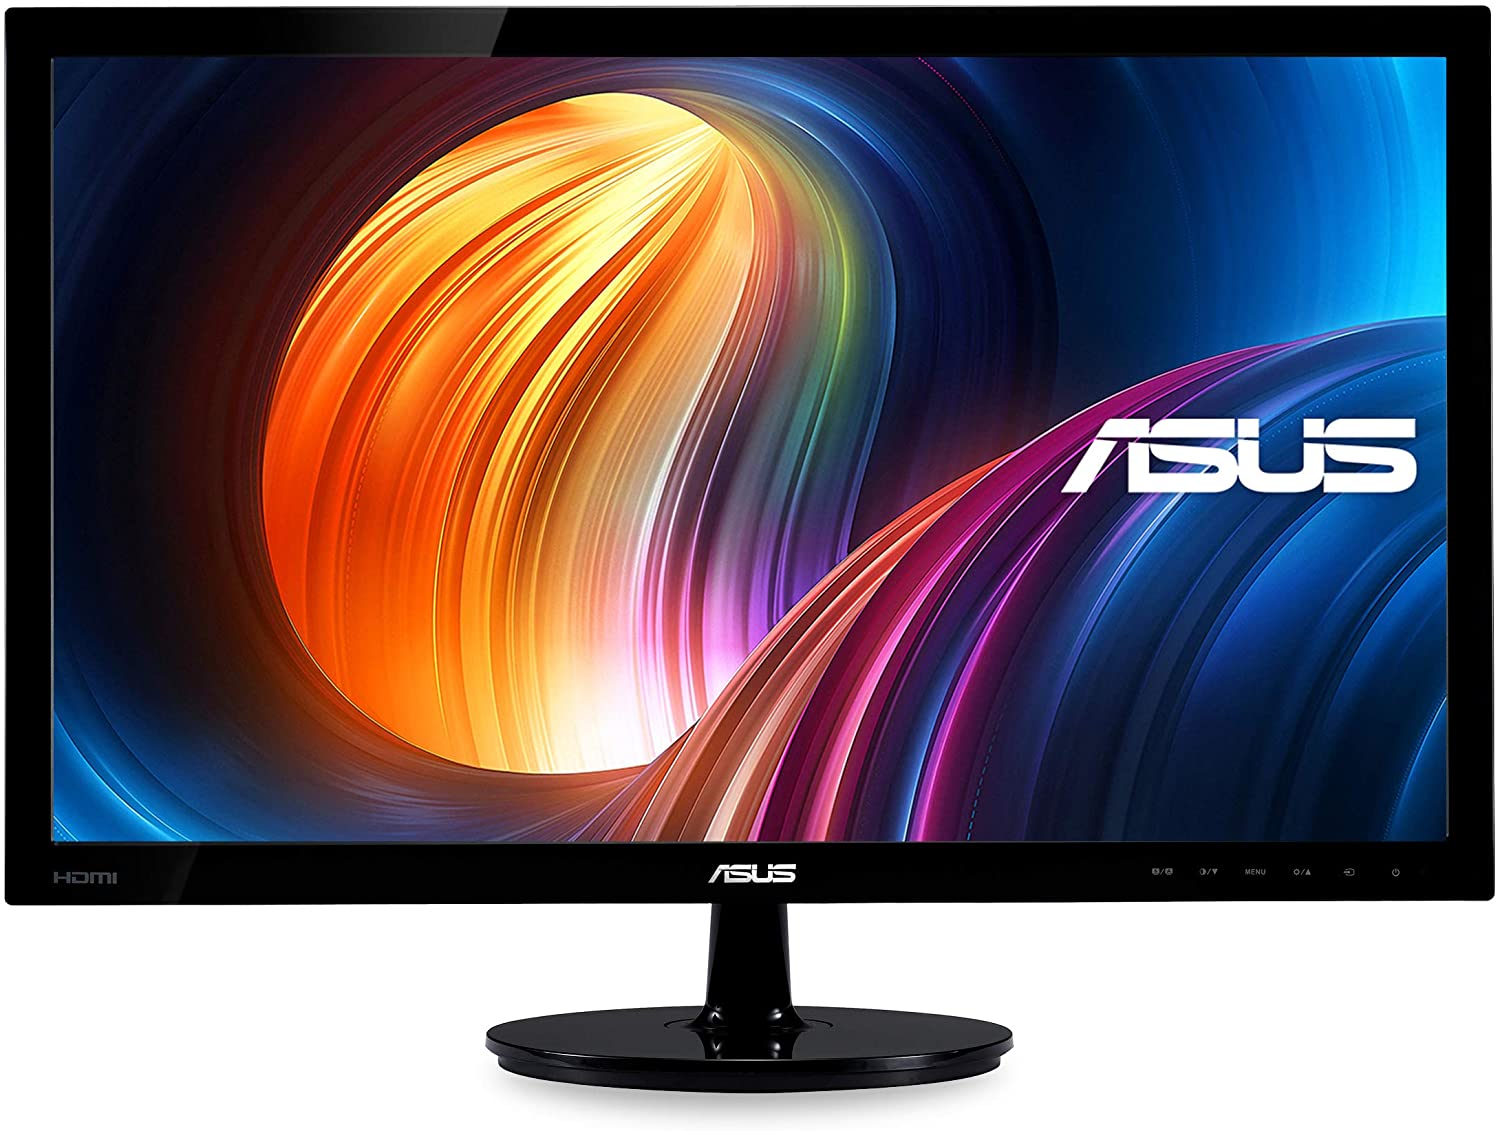  9. Asus Full HD 1080p LCD Monitors 